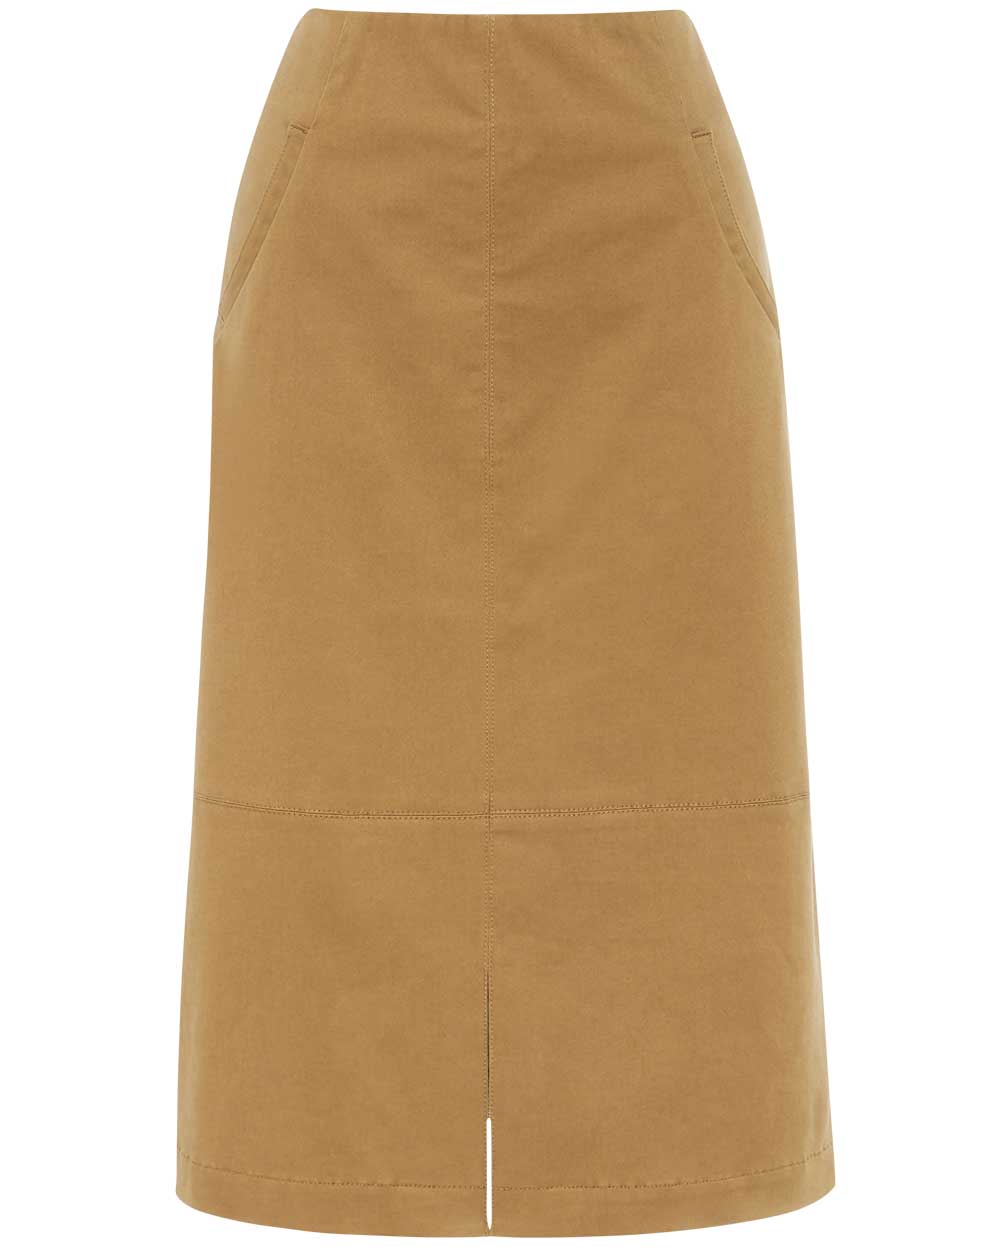 R.M. Williams skirt, $165